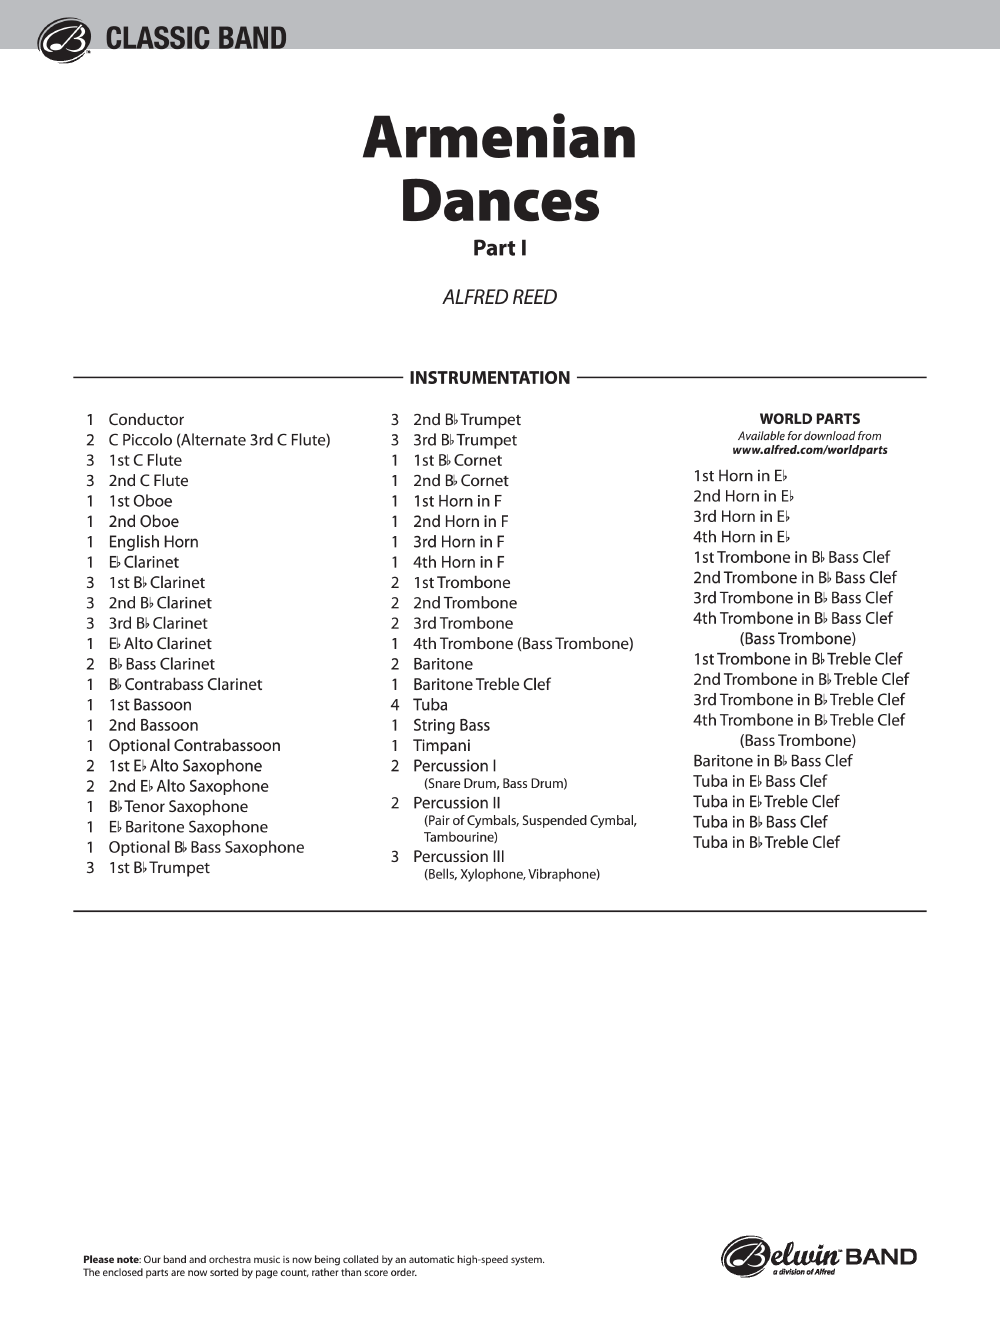 ARMENIAN DANCES #1